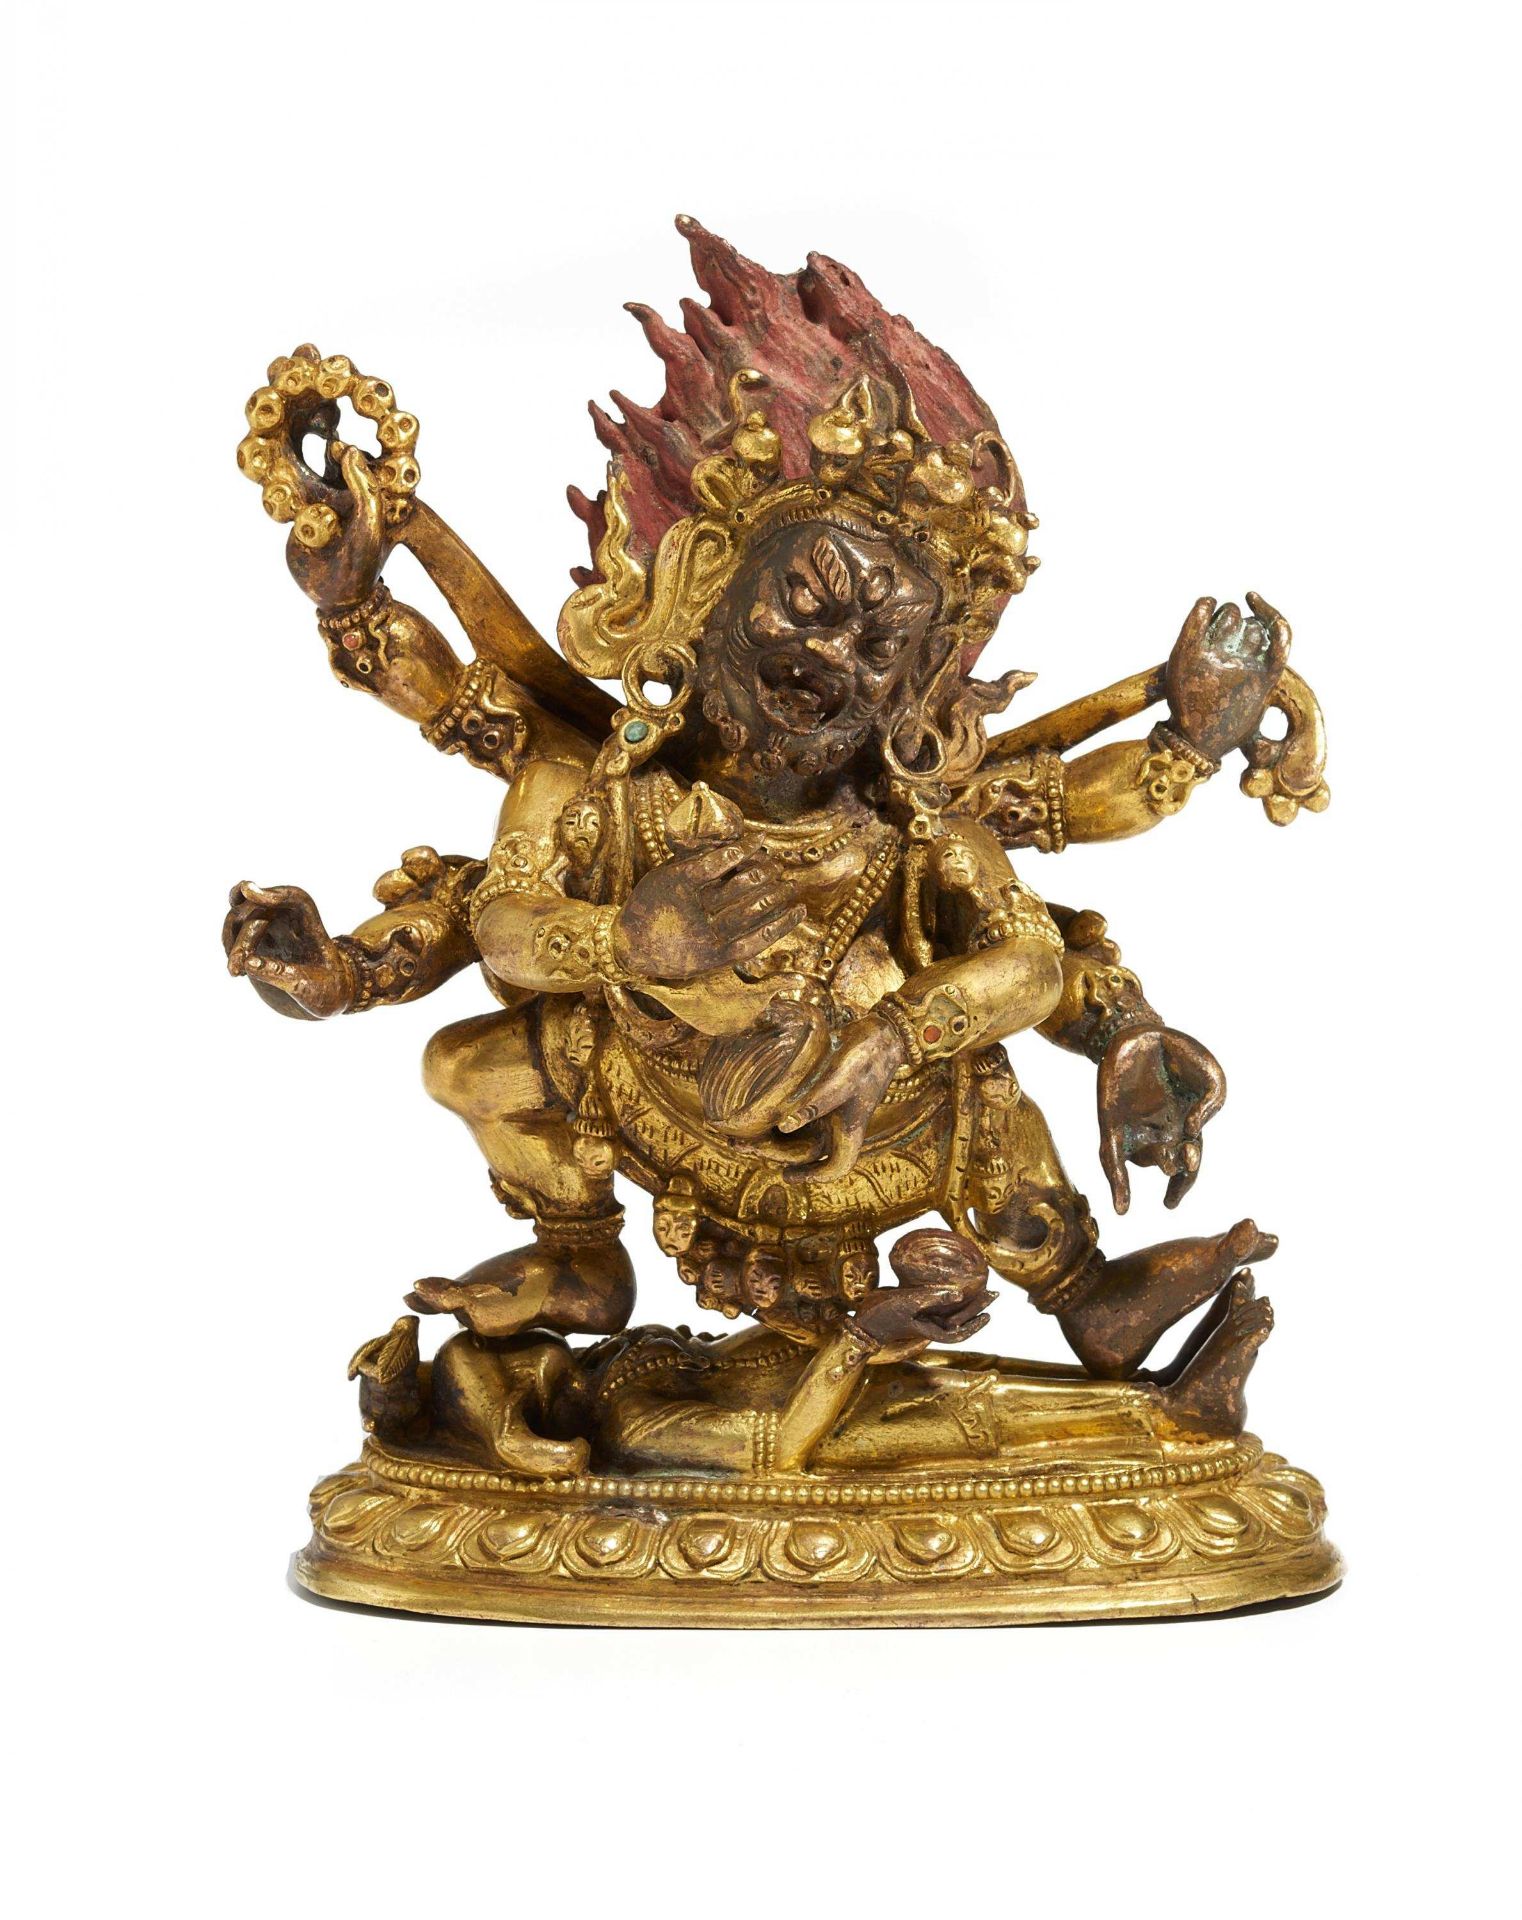 SADBHUJA MAHAKALA. Tibet. Ca. 17th c. Copper bronze with fire gilding, residue of pigments and